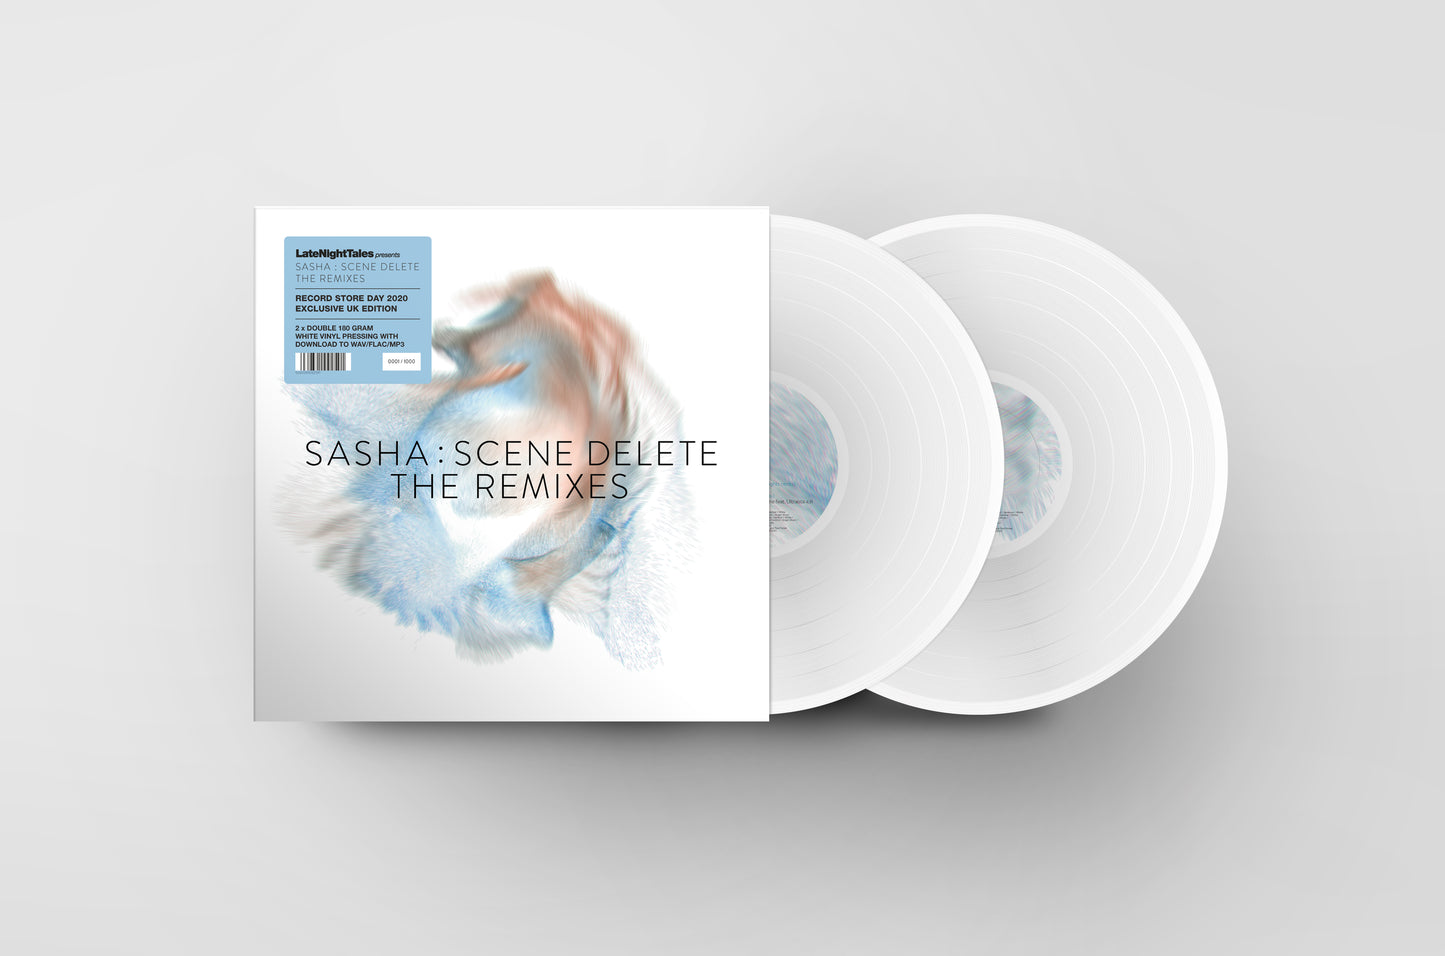 RSD 2020 - Sasha - Scene Delete Remixes